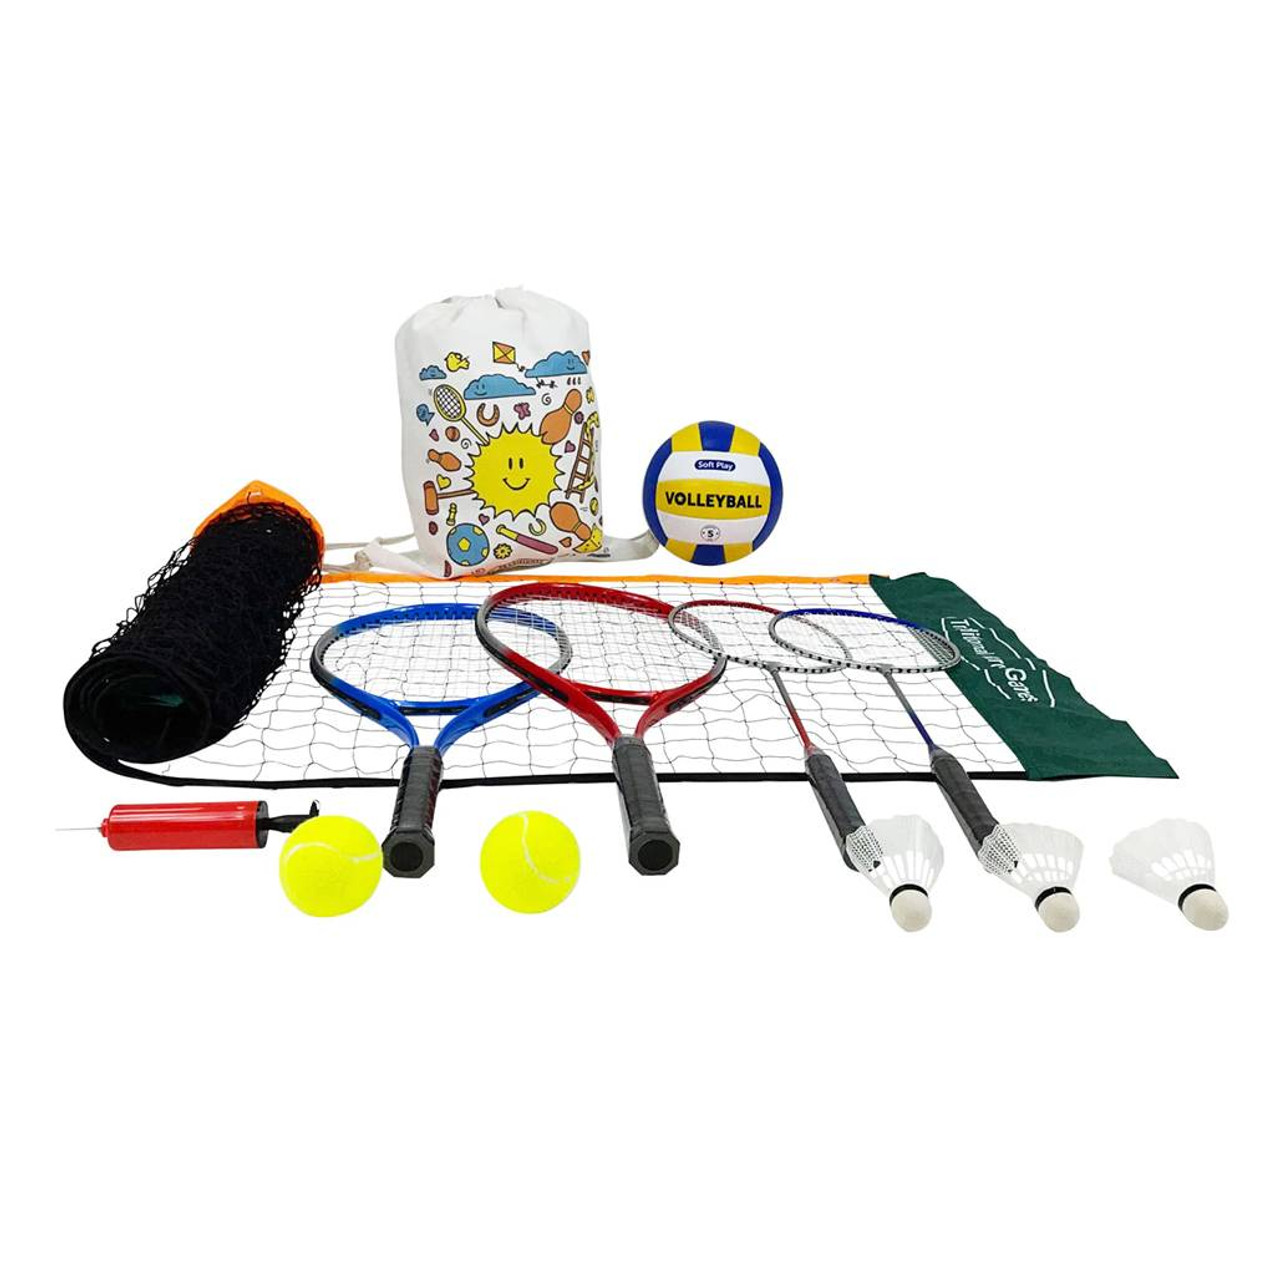 3 In 1 Badminton VolleyballandTennis Playset With 5m Net